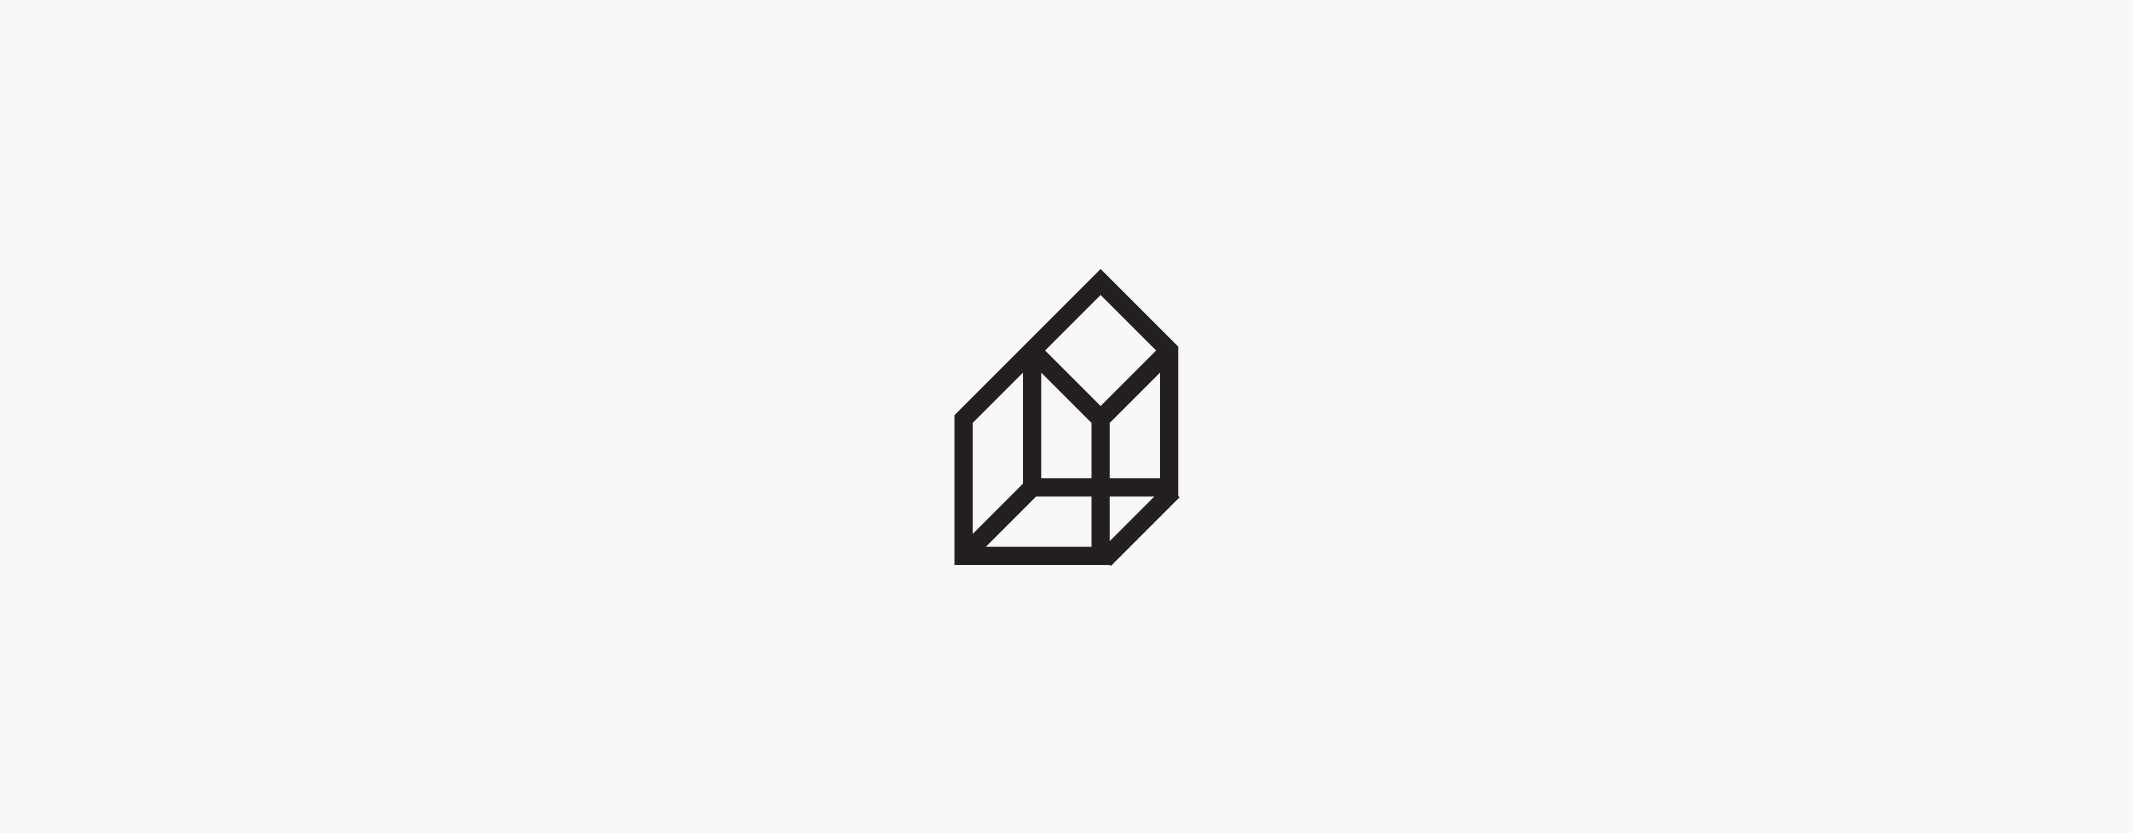 15_logos_house